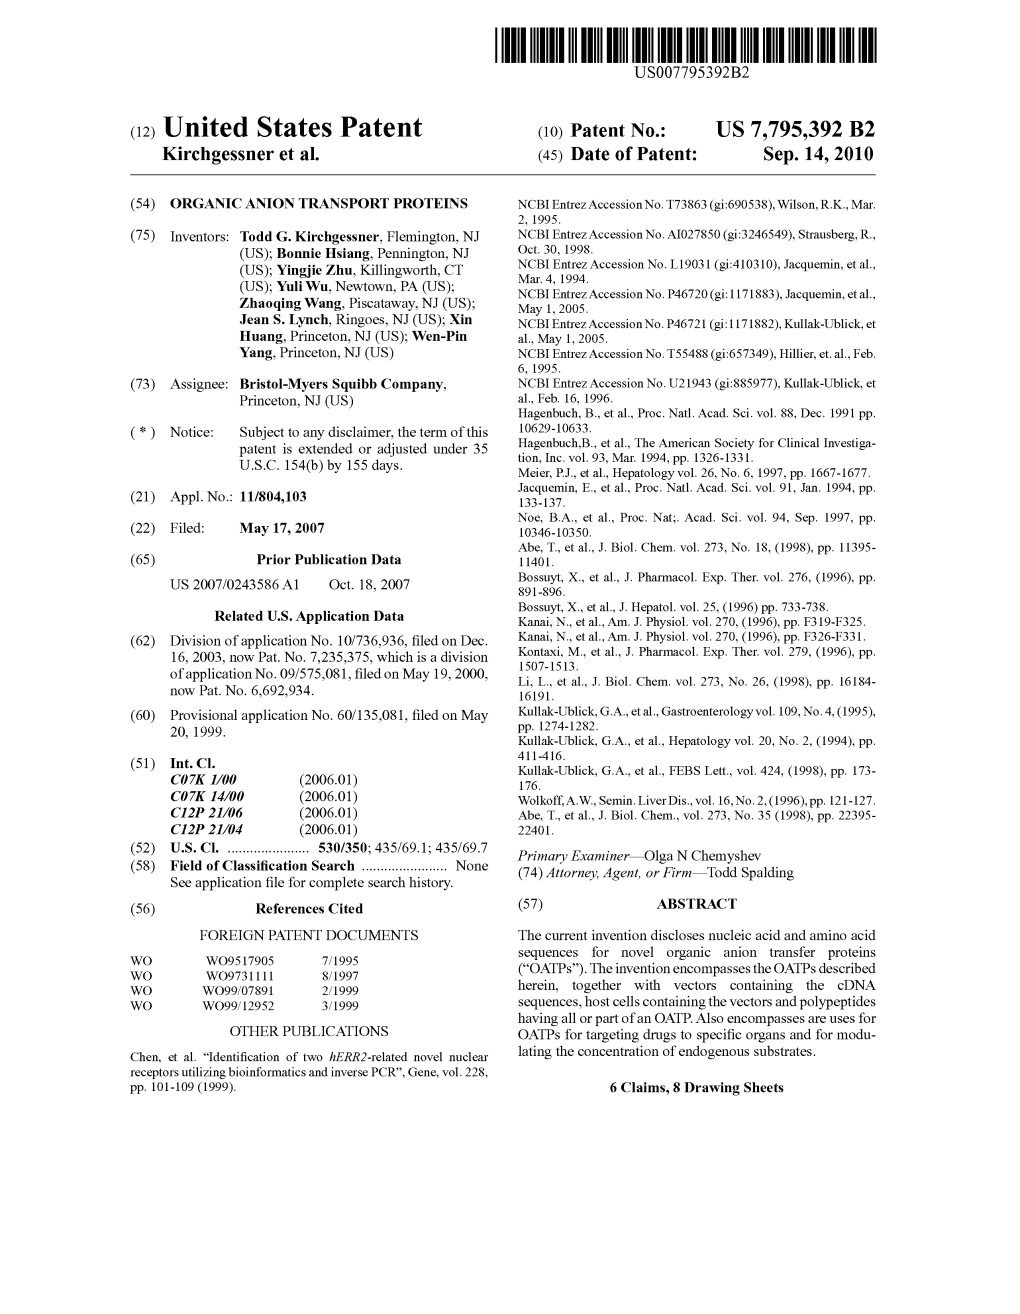 (12) United States Patent (10) Patent No.: US 7,795,392 B2 Kirchgessner Et Al